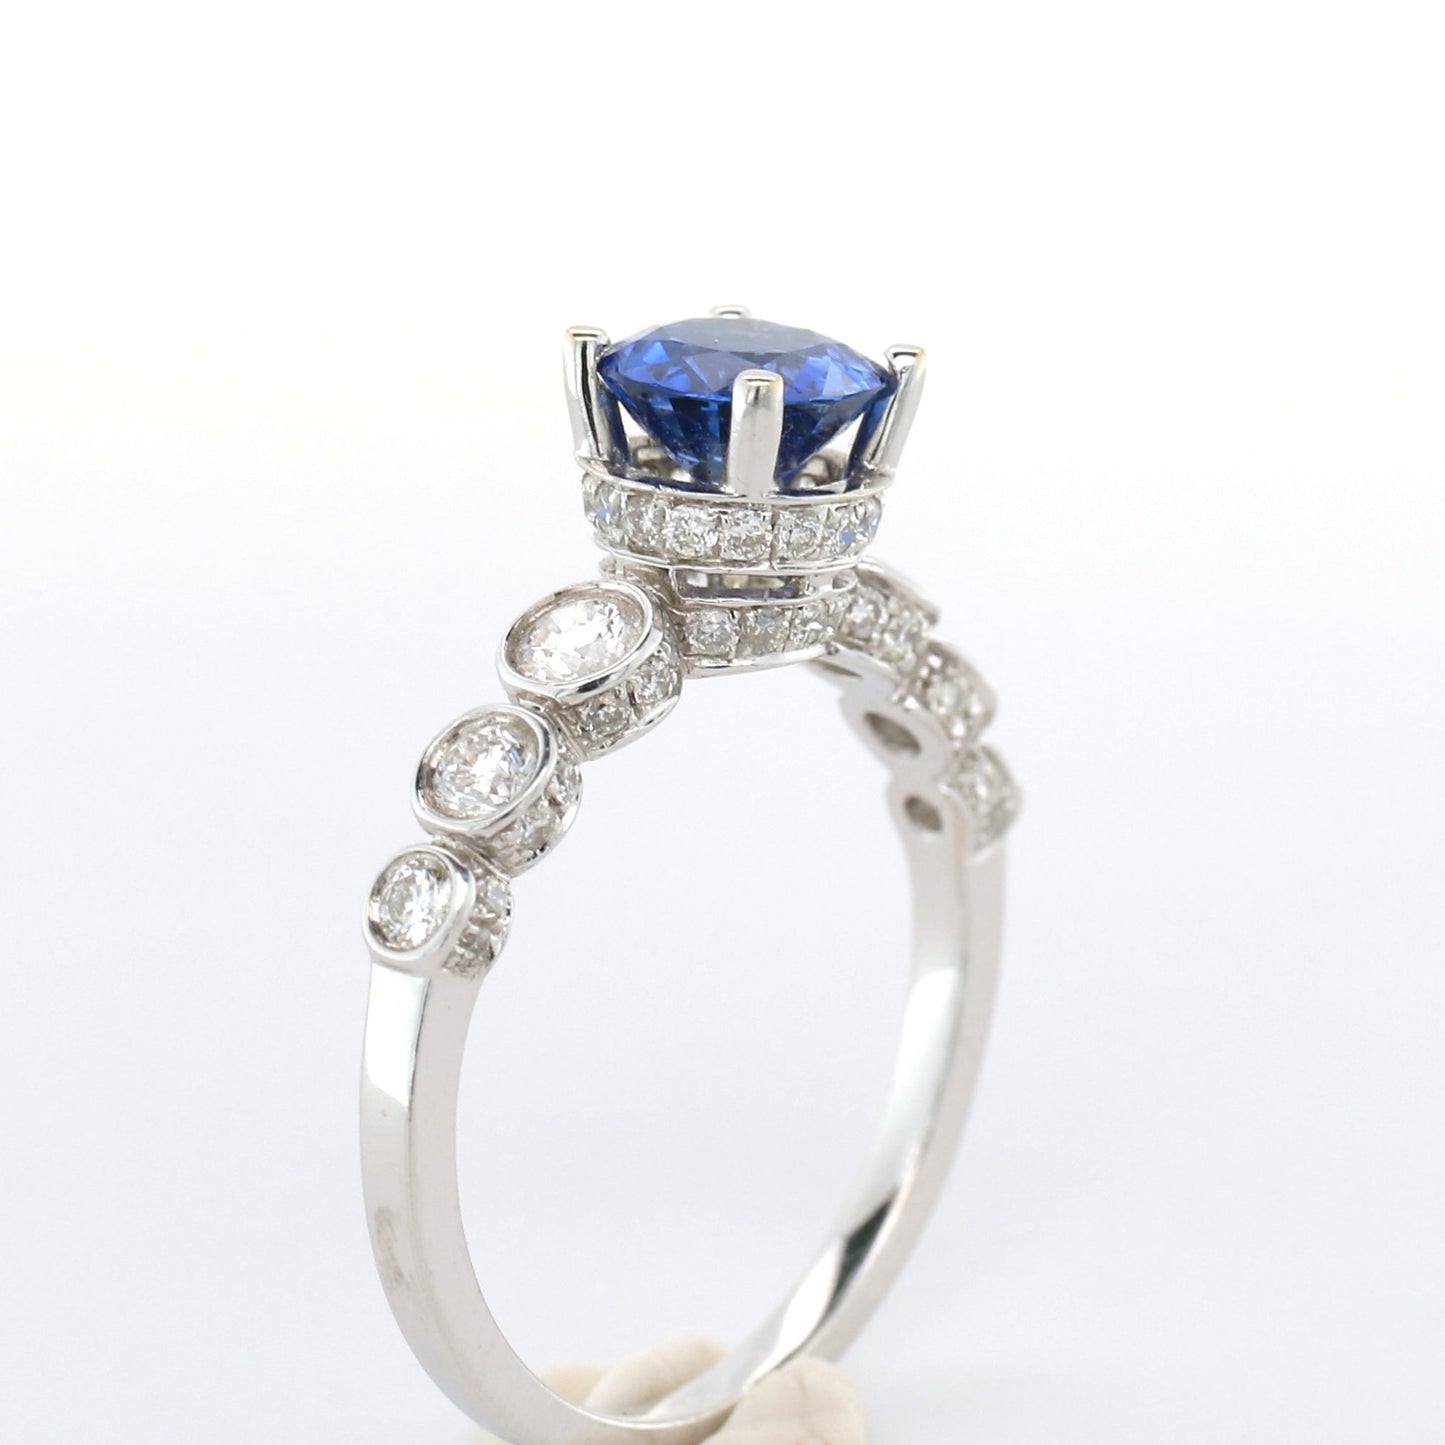 Blue Sapphire & Diamond Ring - 18K White Gold  2.55g